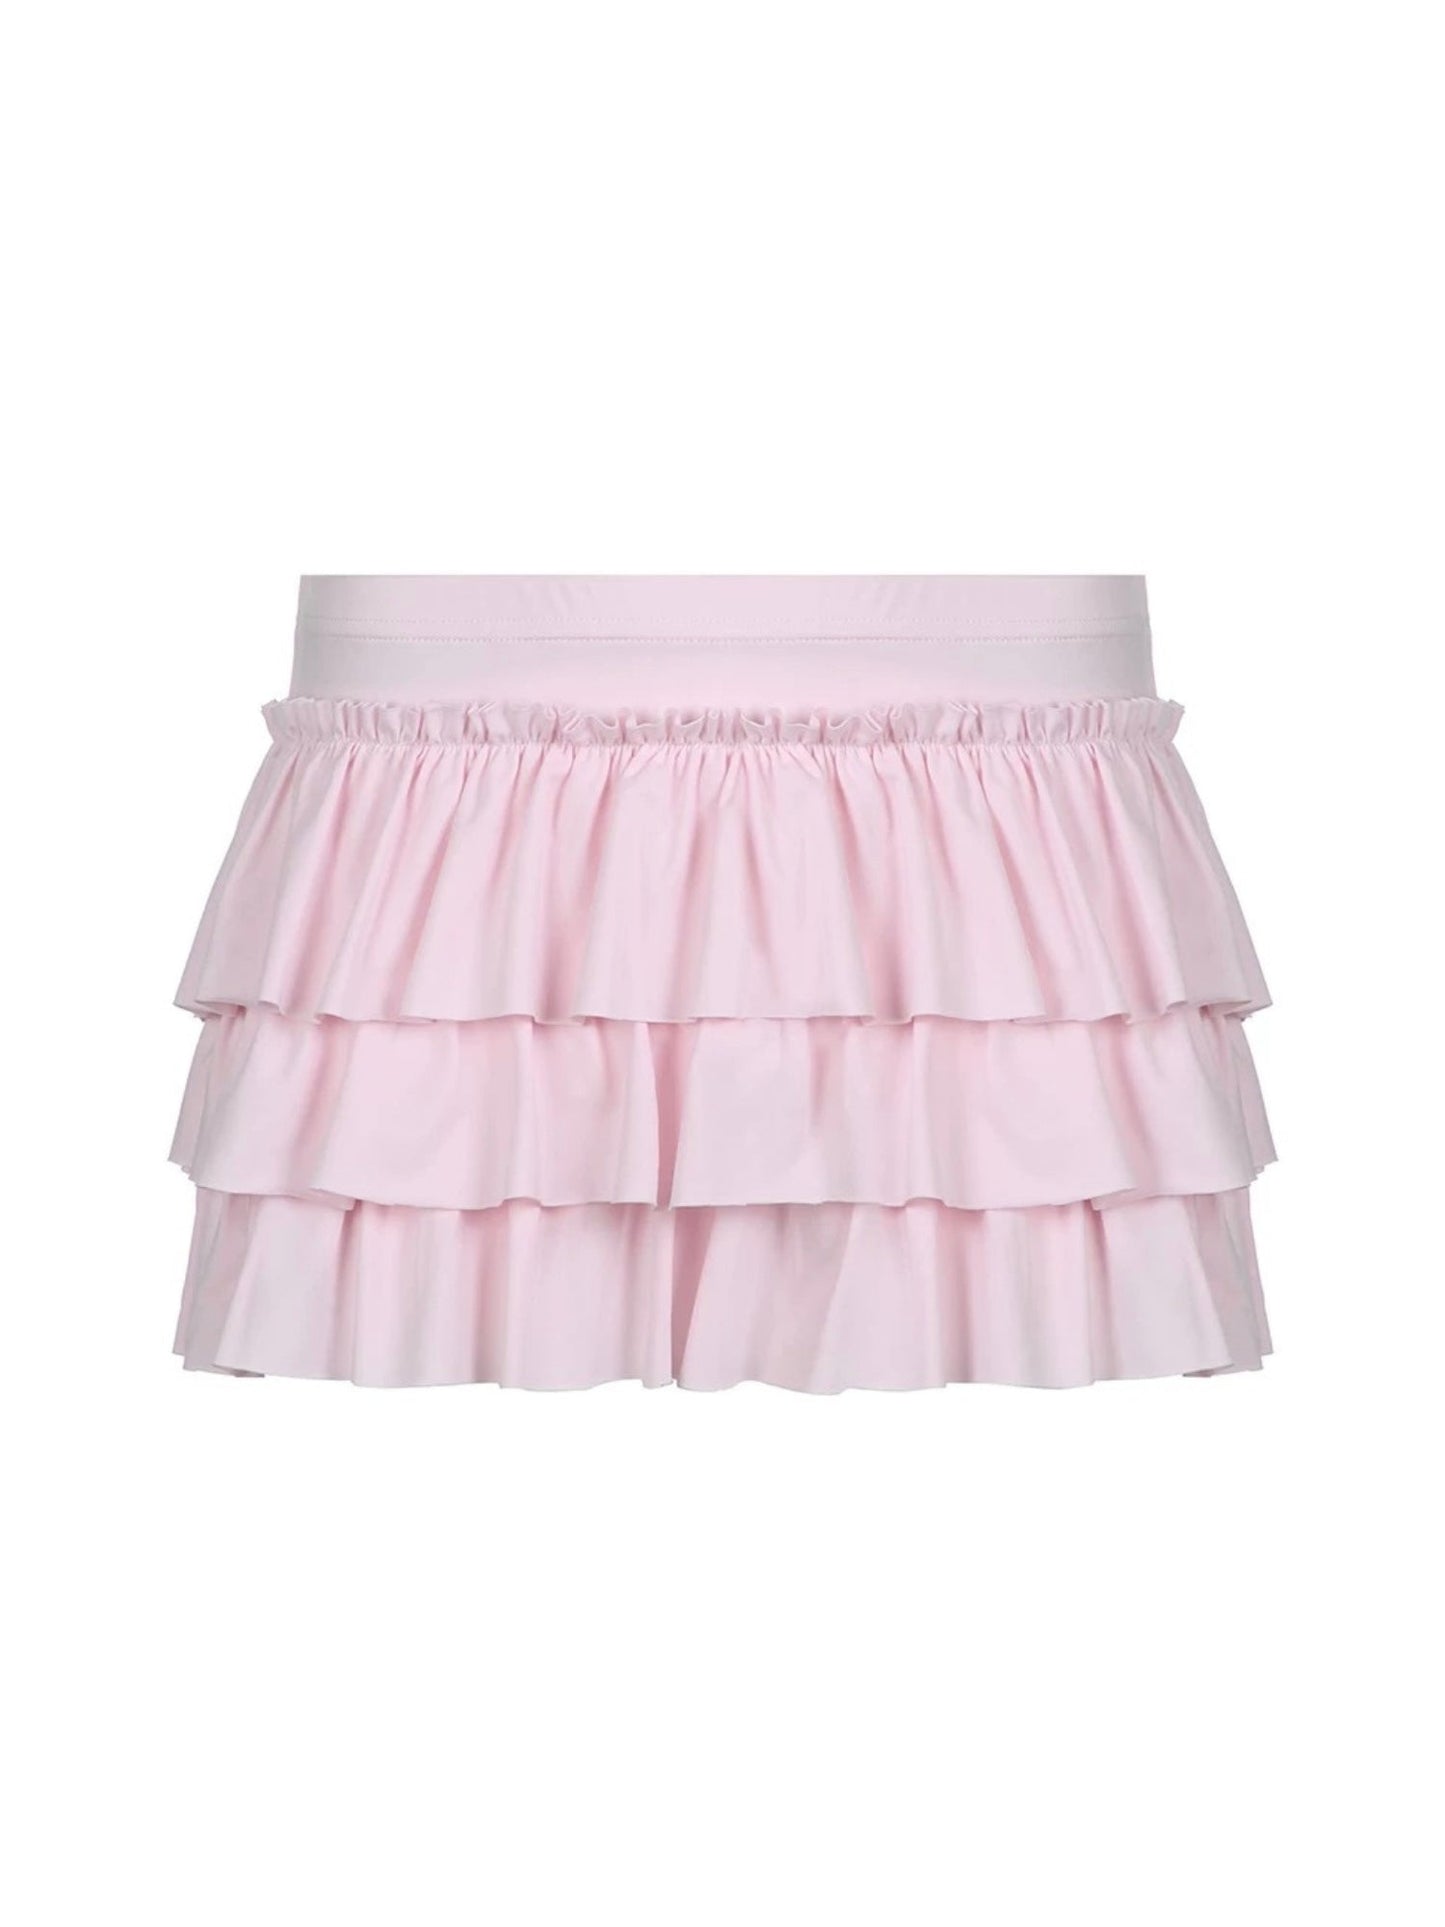 'Deserts' Coquette Ribbon Pink Ruffled Mini Skirt AlielNosirrah